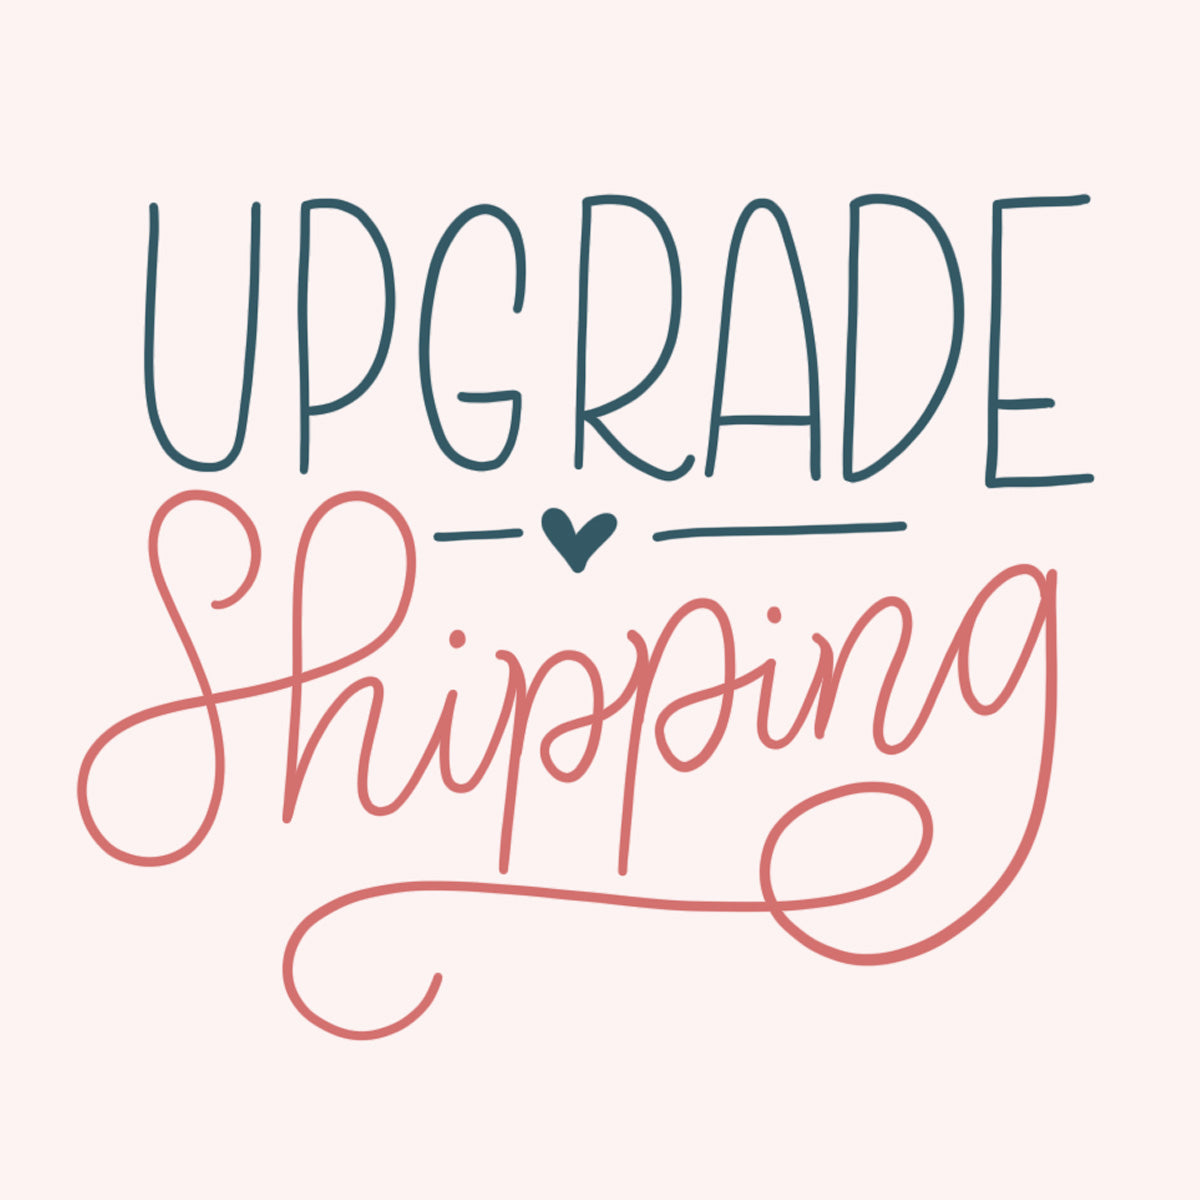 Upgrade your Shipping - howjoyfulshop